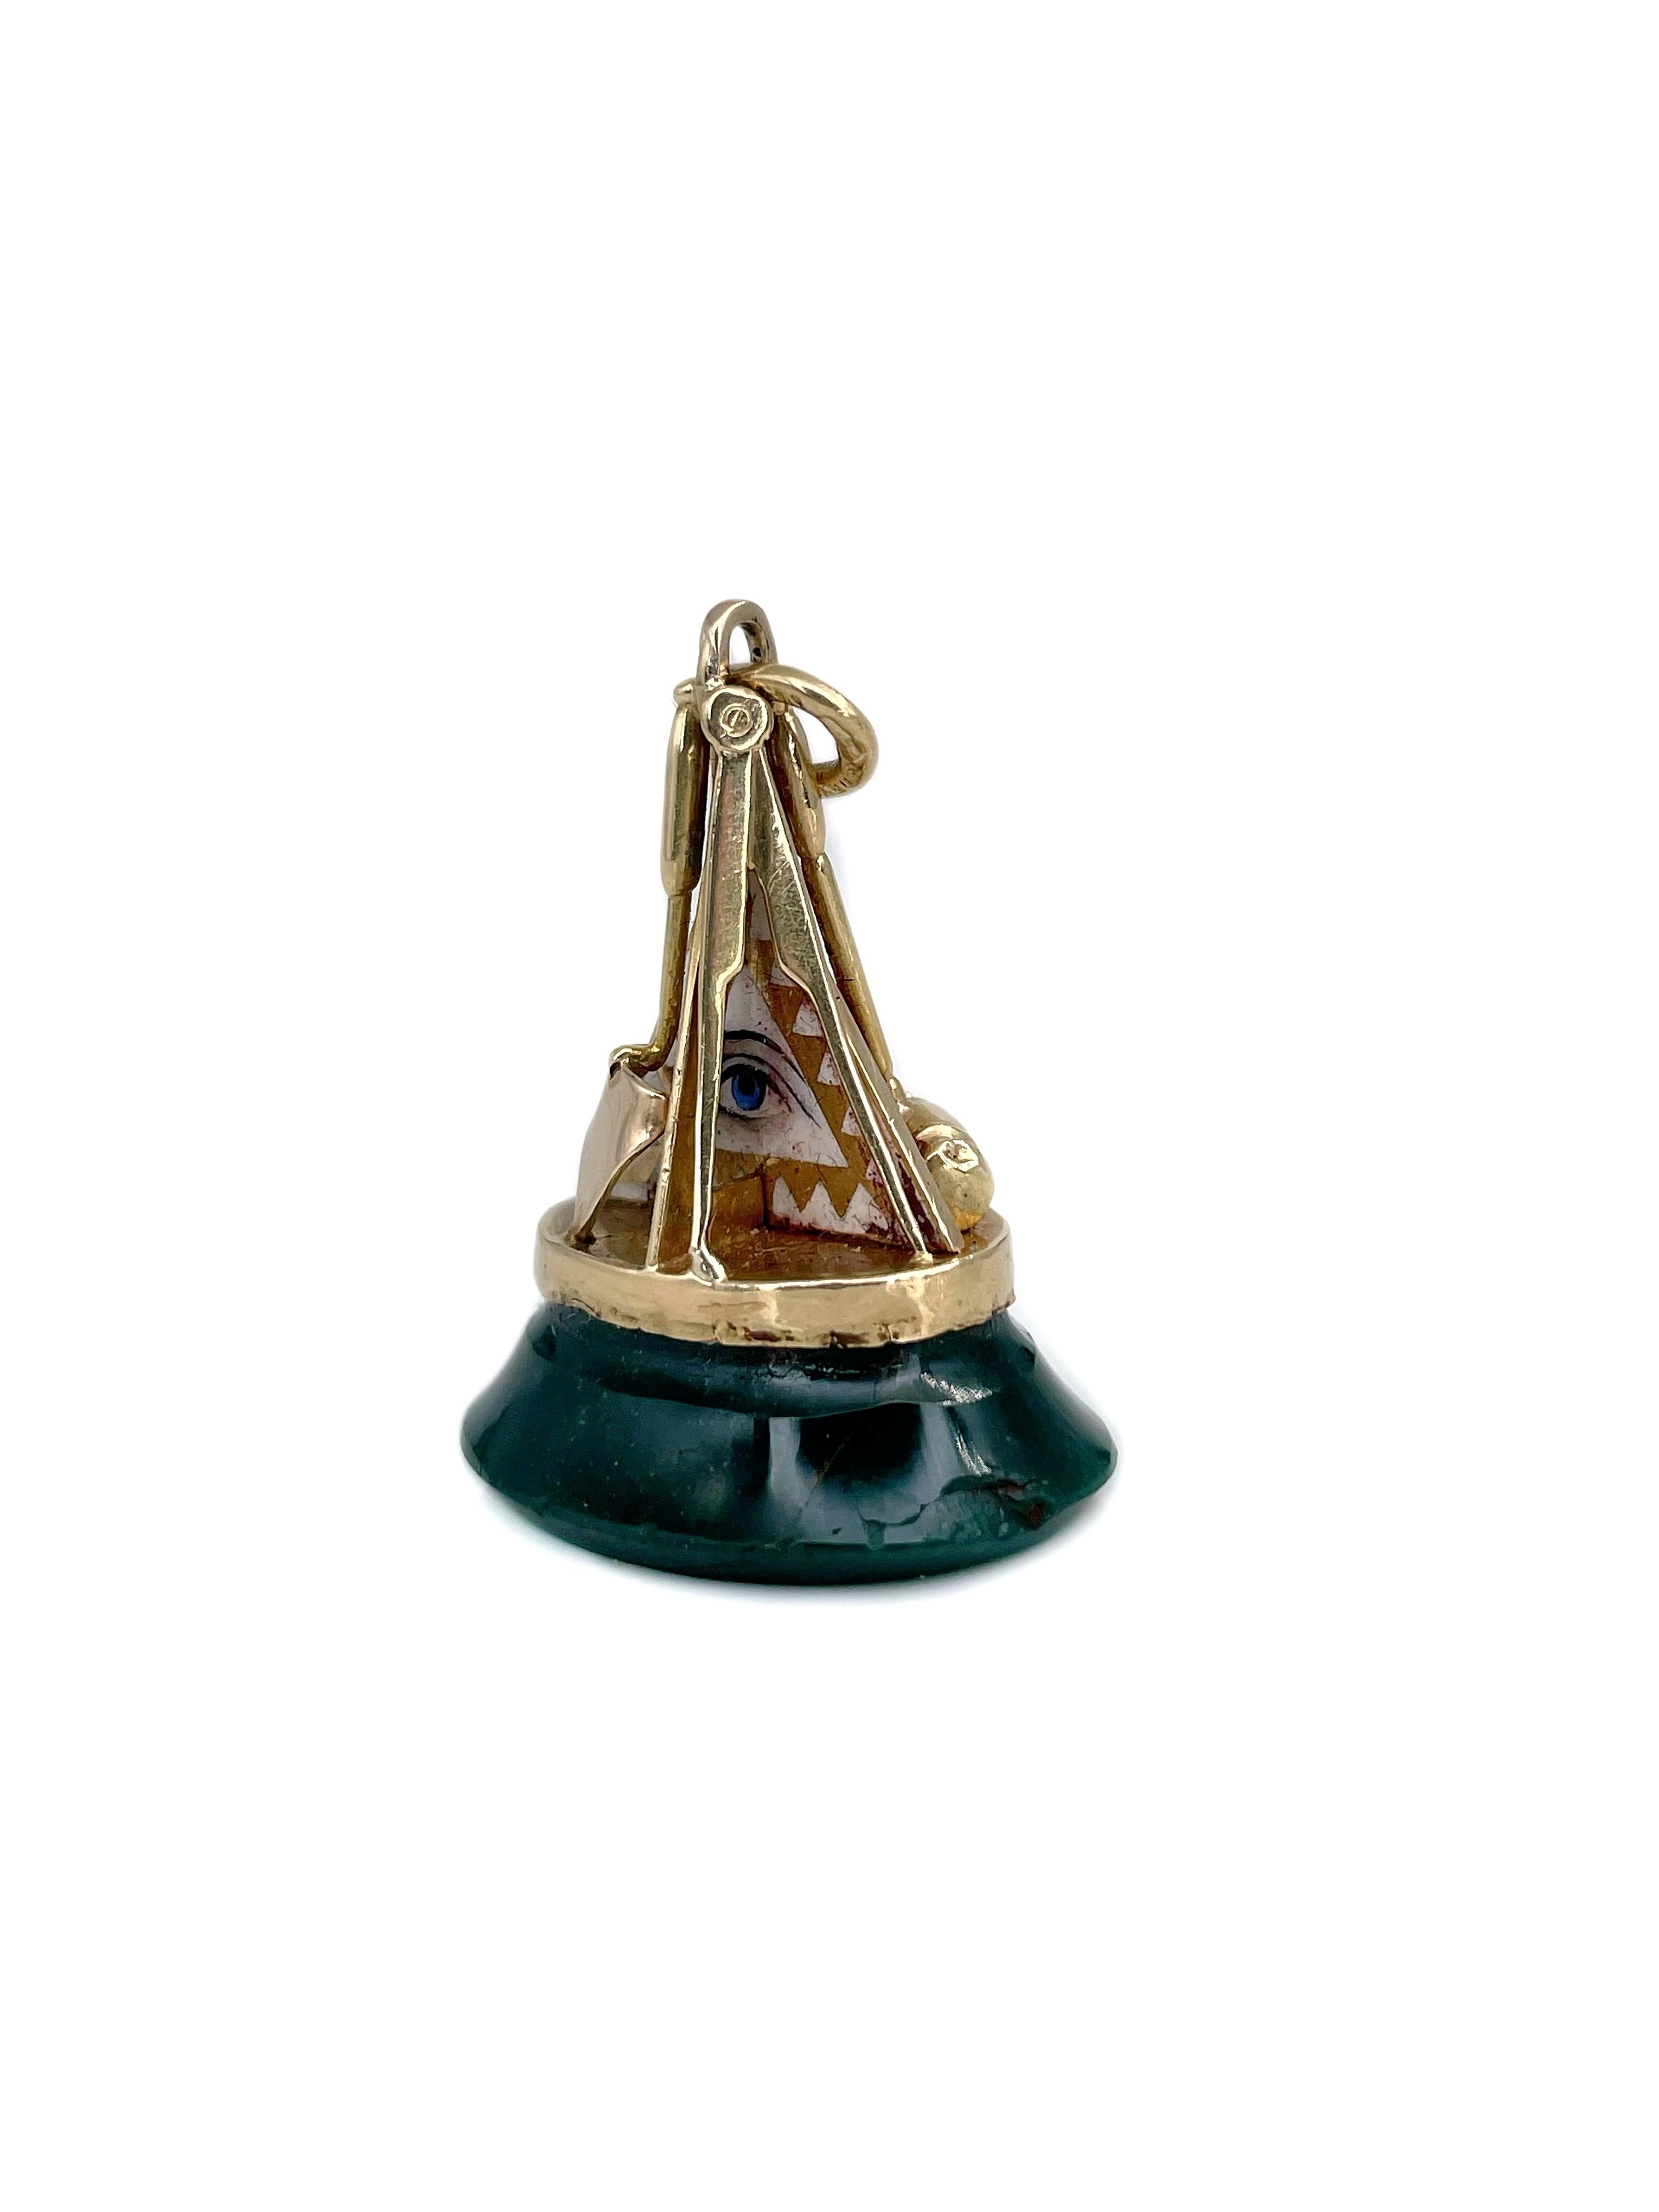 Masonic 18 Karat Gold All Seeing Eye Enamel Heliotrope Fob Seal Pendant In Good Condition For Sale In Vilnius, LT